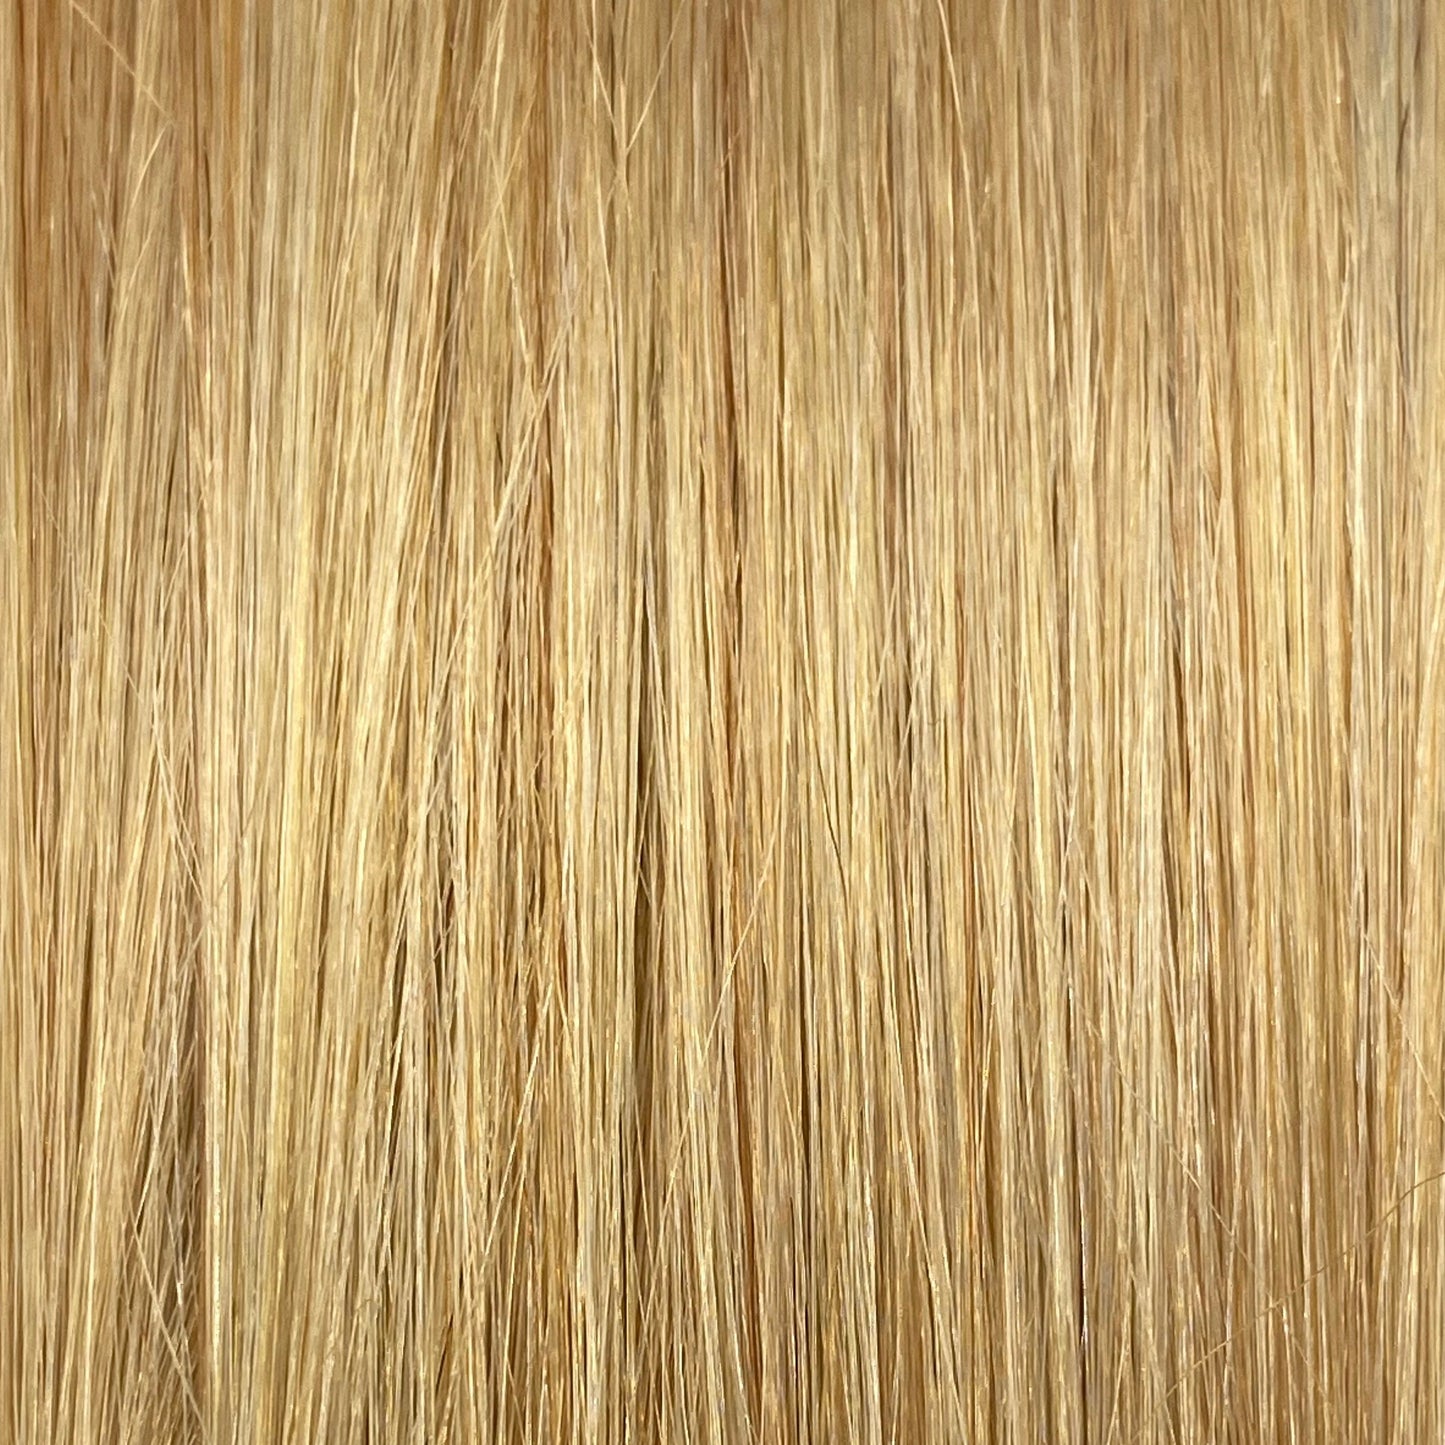 Fusion hair extensions #24 - 50cm/20 inches - Ash Blonde Fusion Euro So Cap 